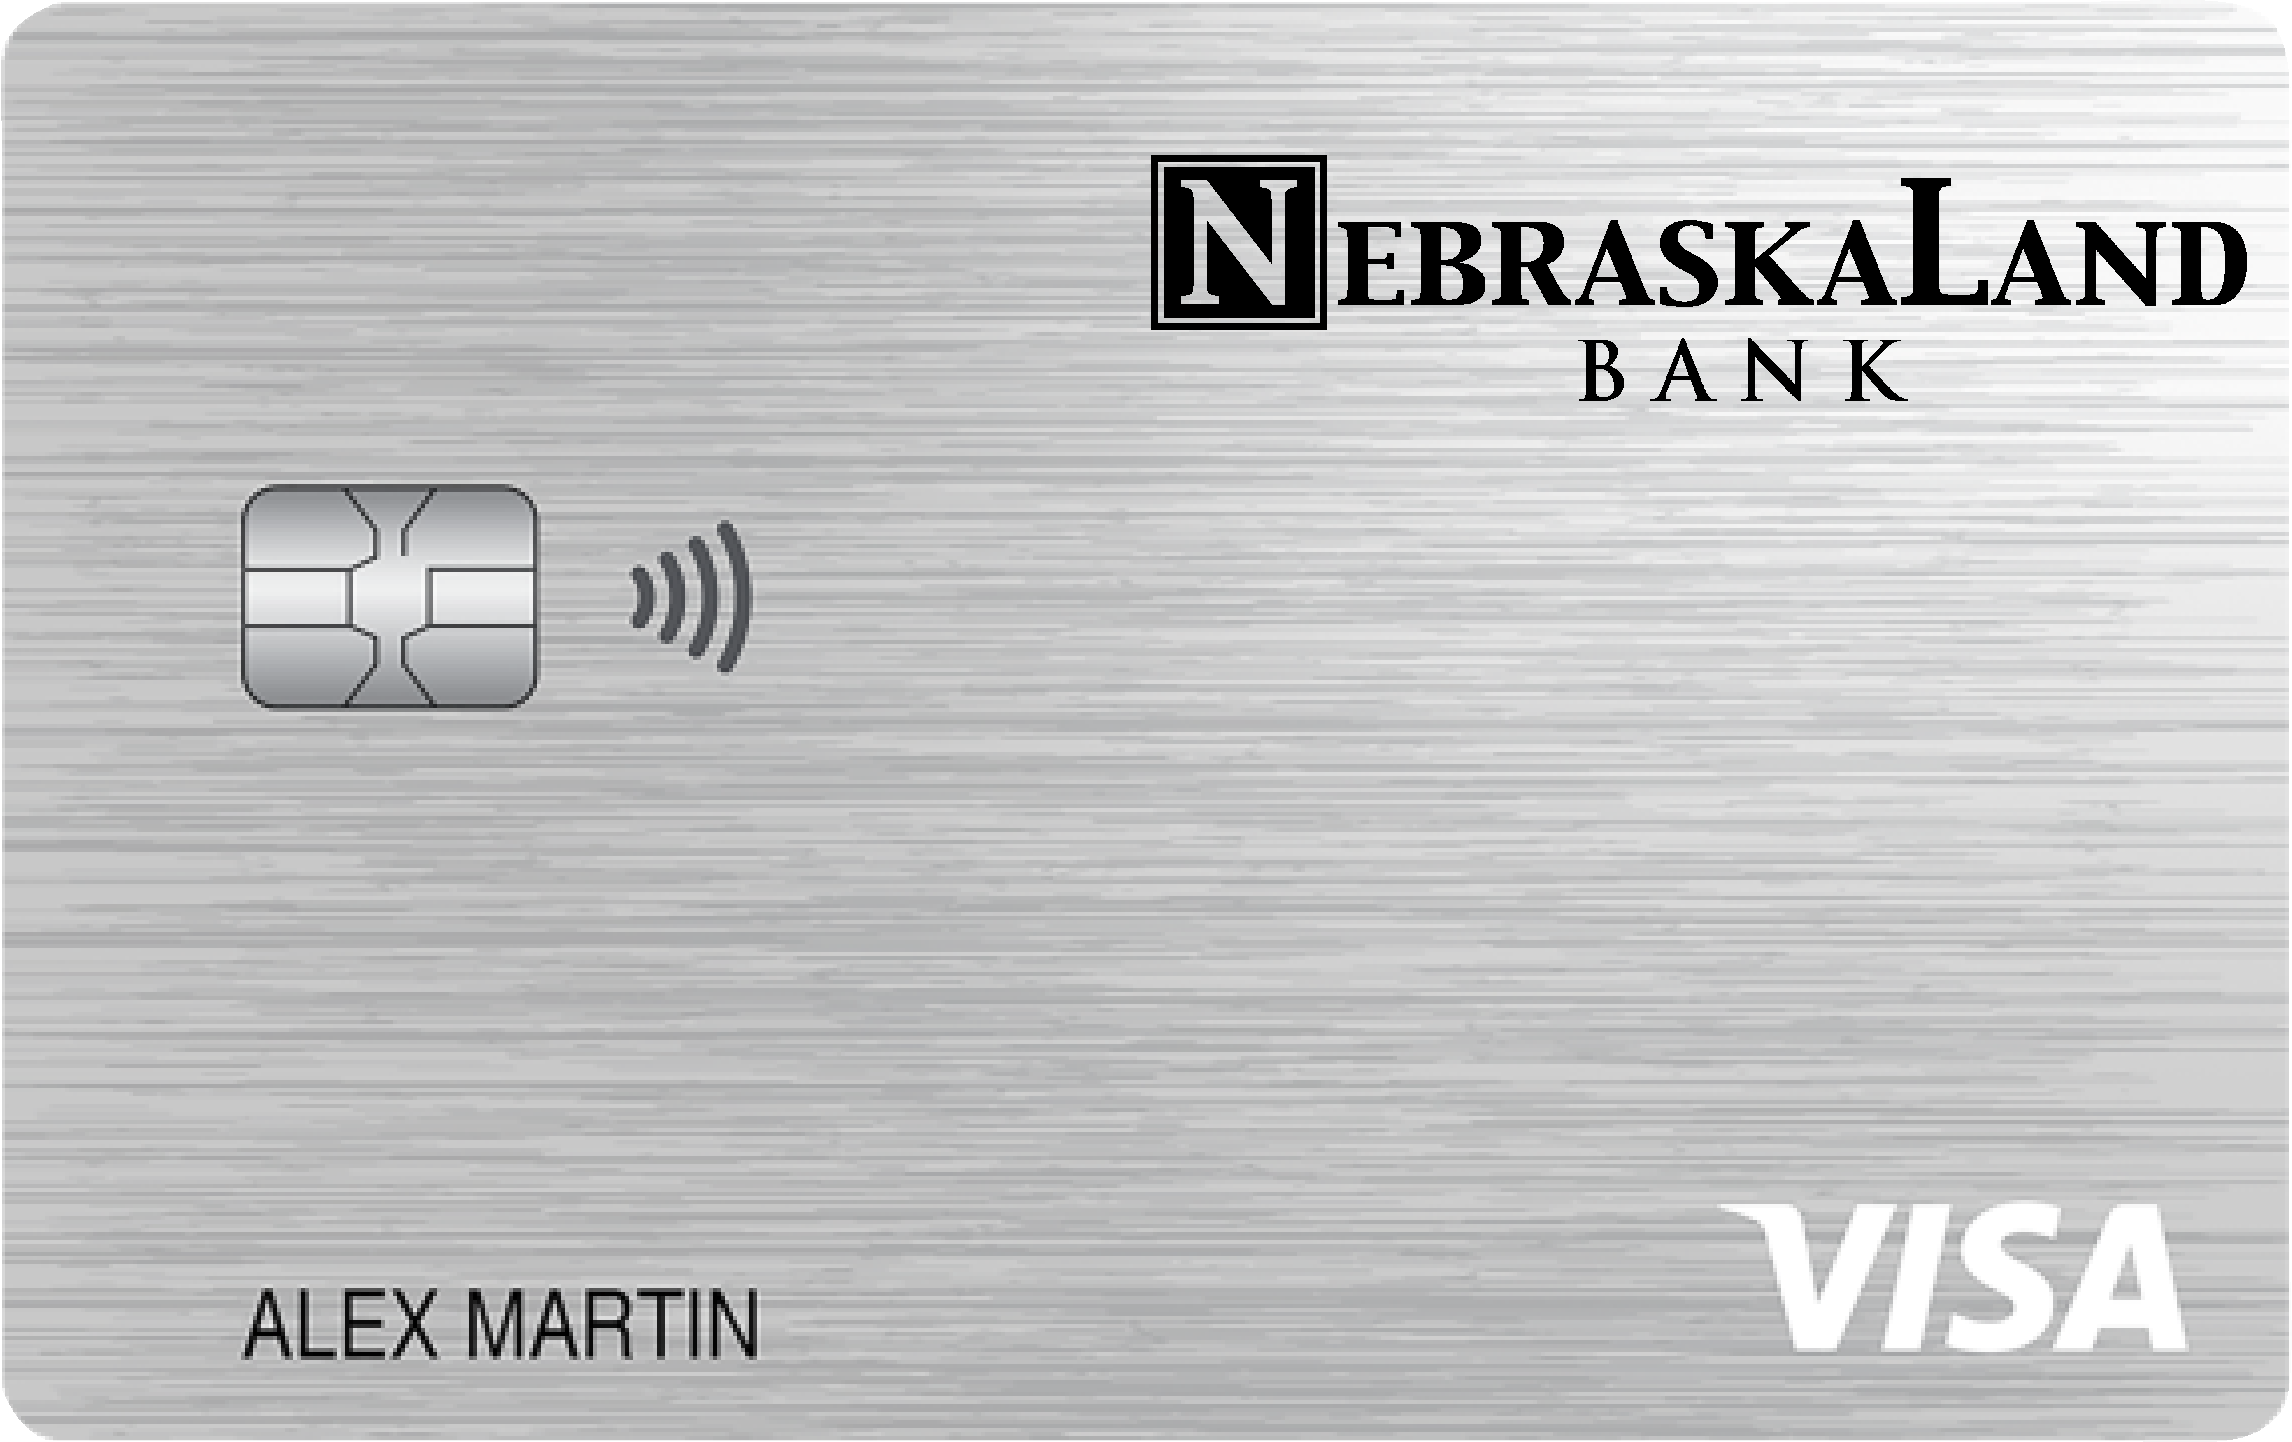 Nebraskaland Bank